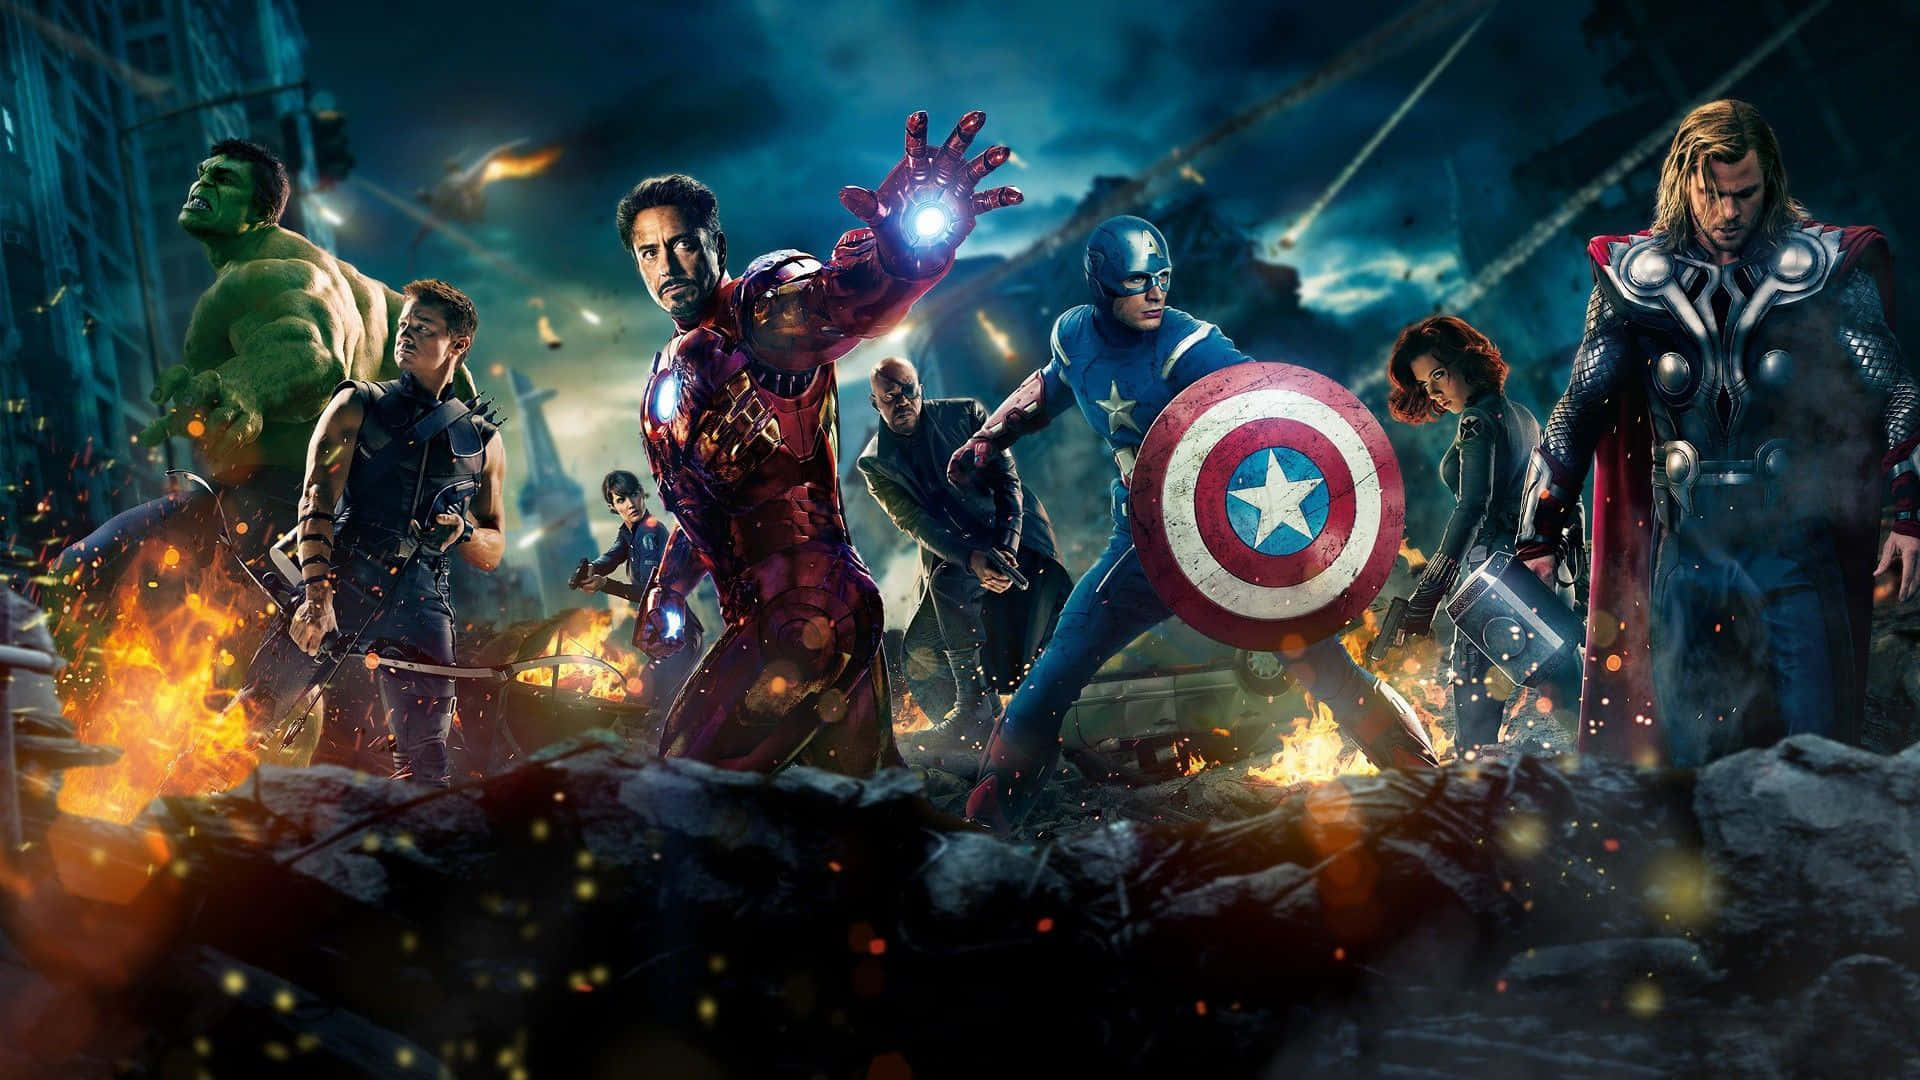 Image  A Wallpaper of Iron Man Movies Wallpaper